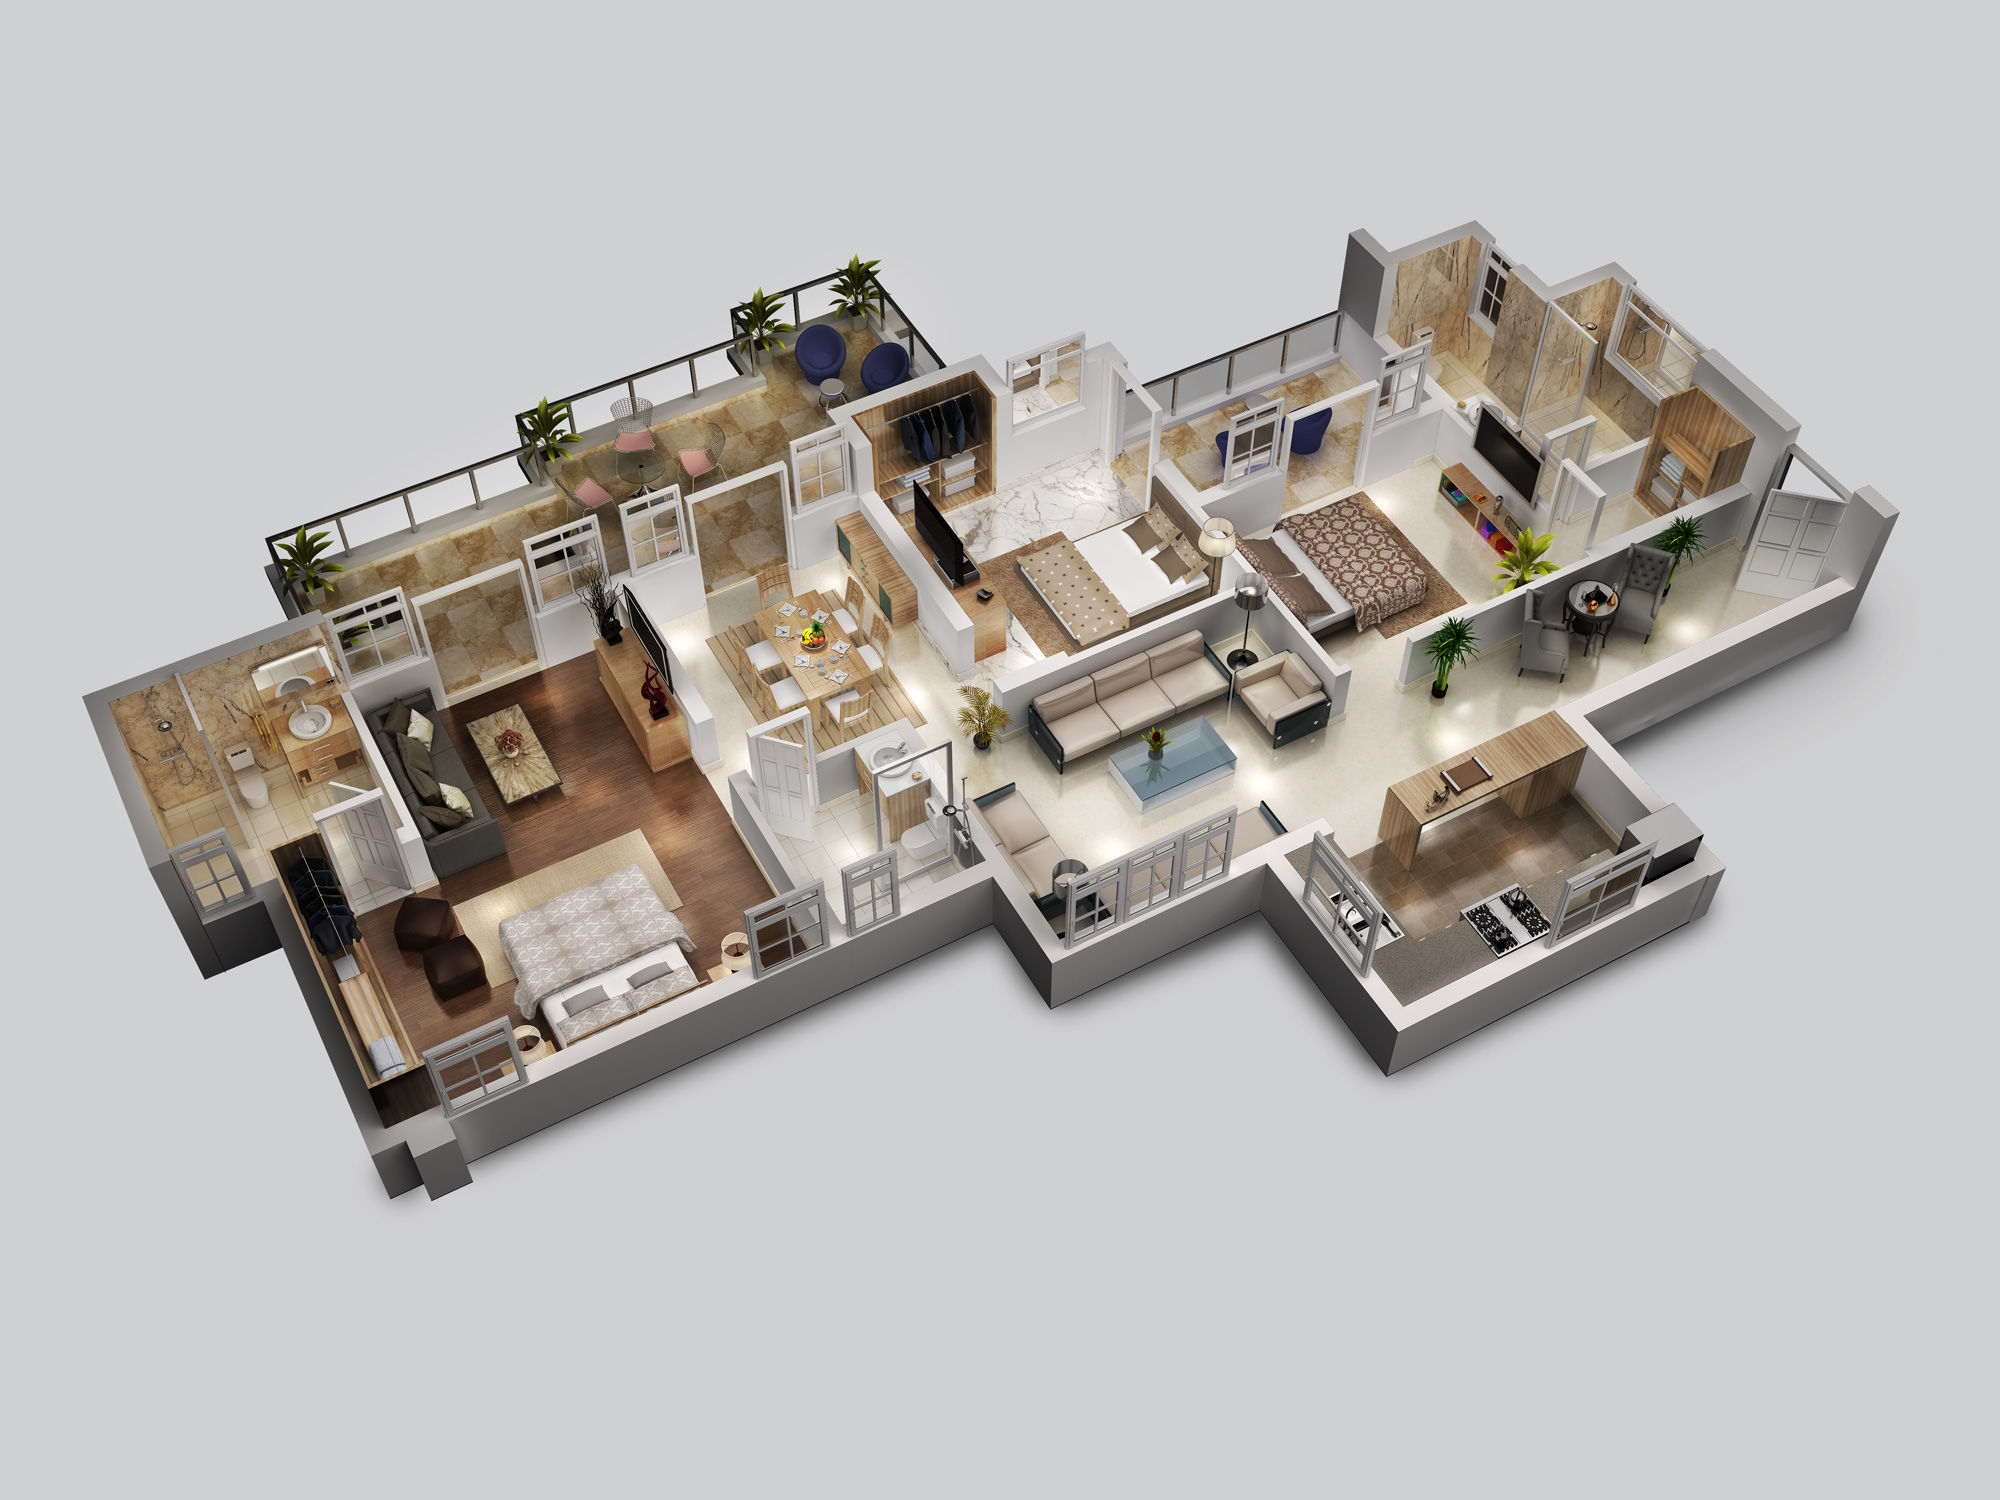 3d floor plan rendering by avenir design studio for private apartment